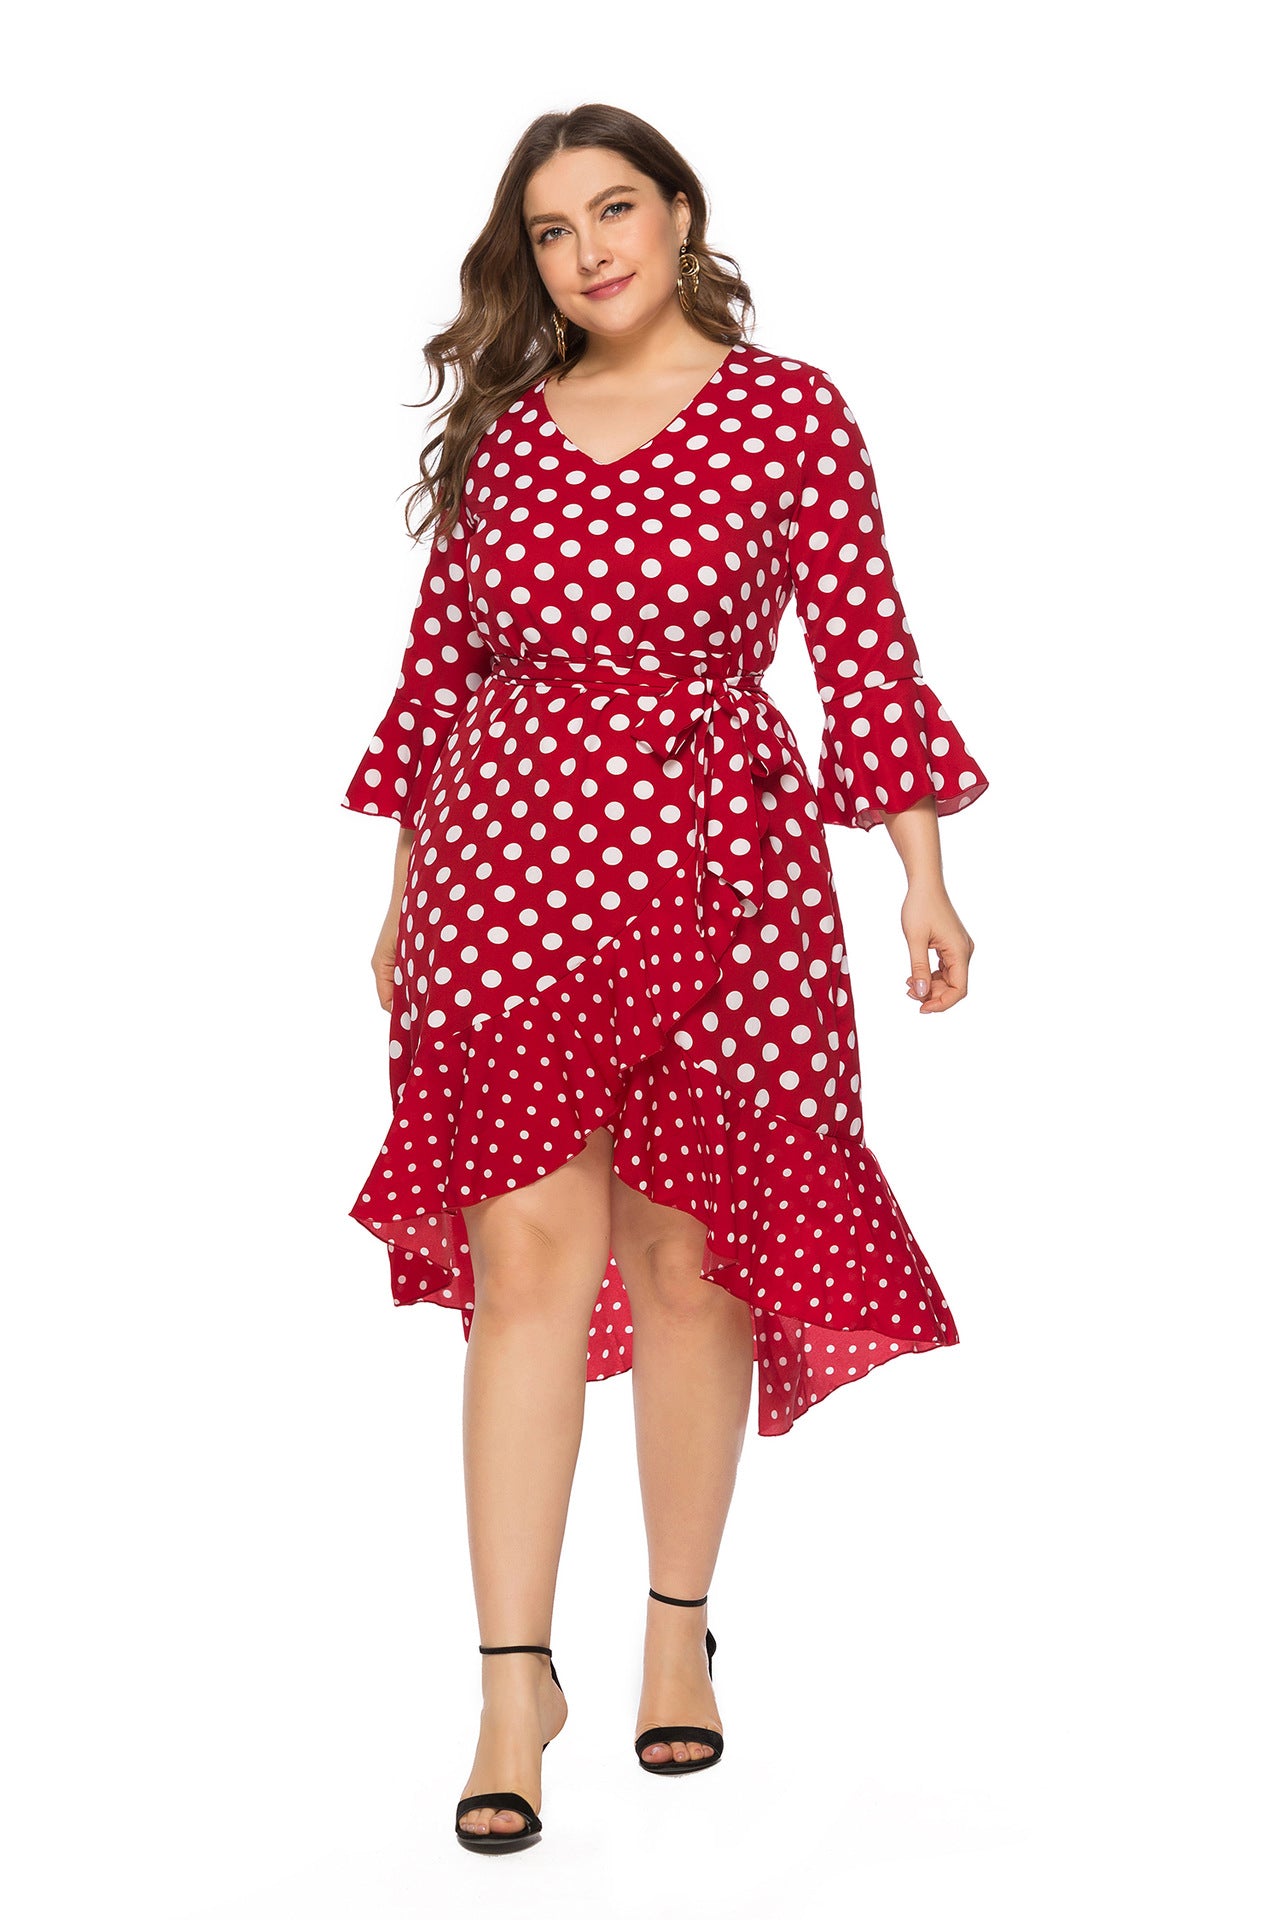 Summer Polk Dot Print Plus Sizes Dresses-Plus Size Dresses-Red-XL-US 14-Free Shipping at meselling99